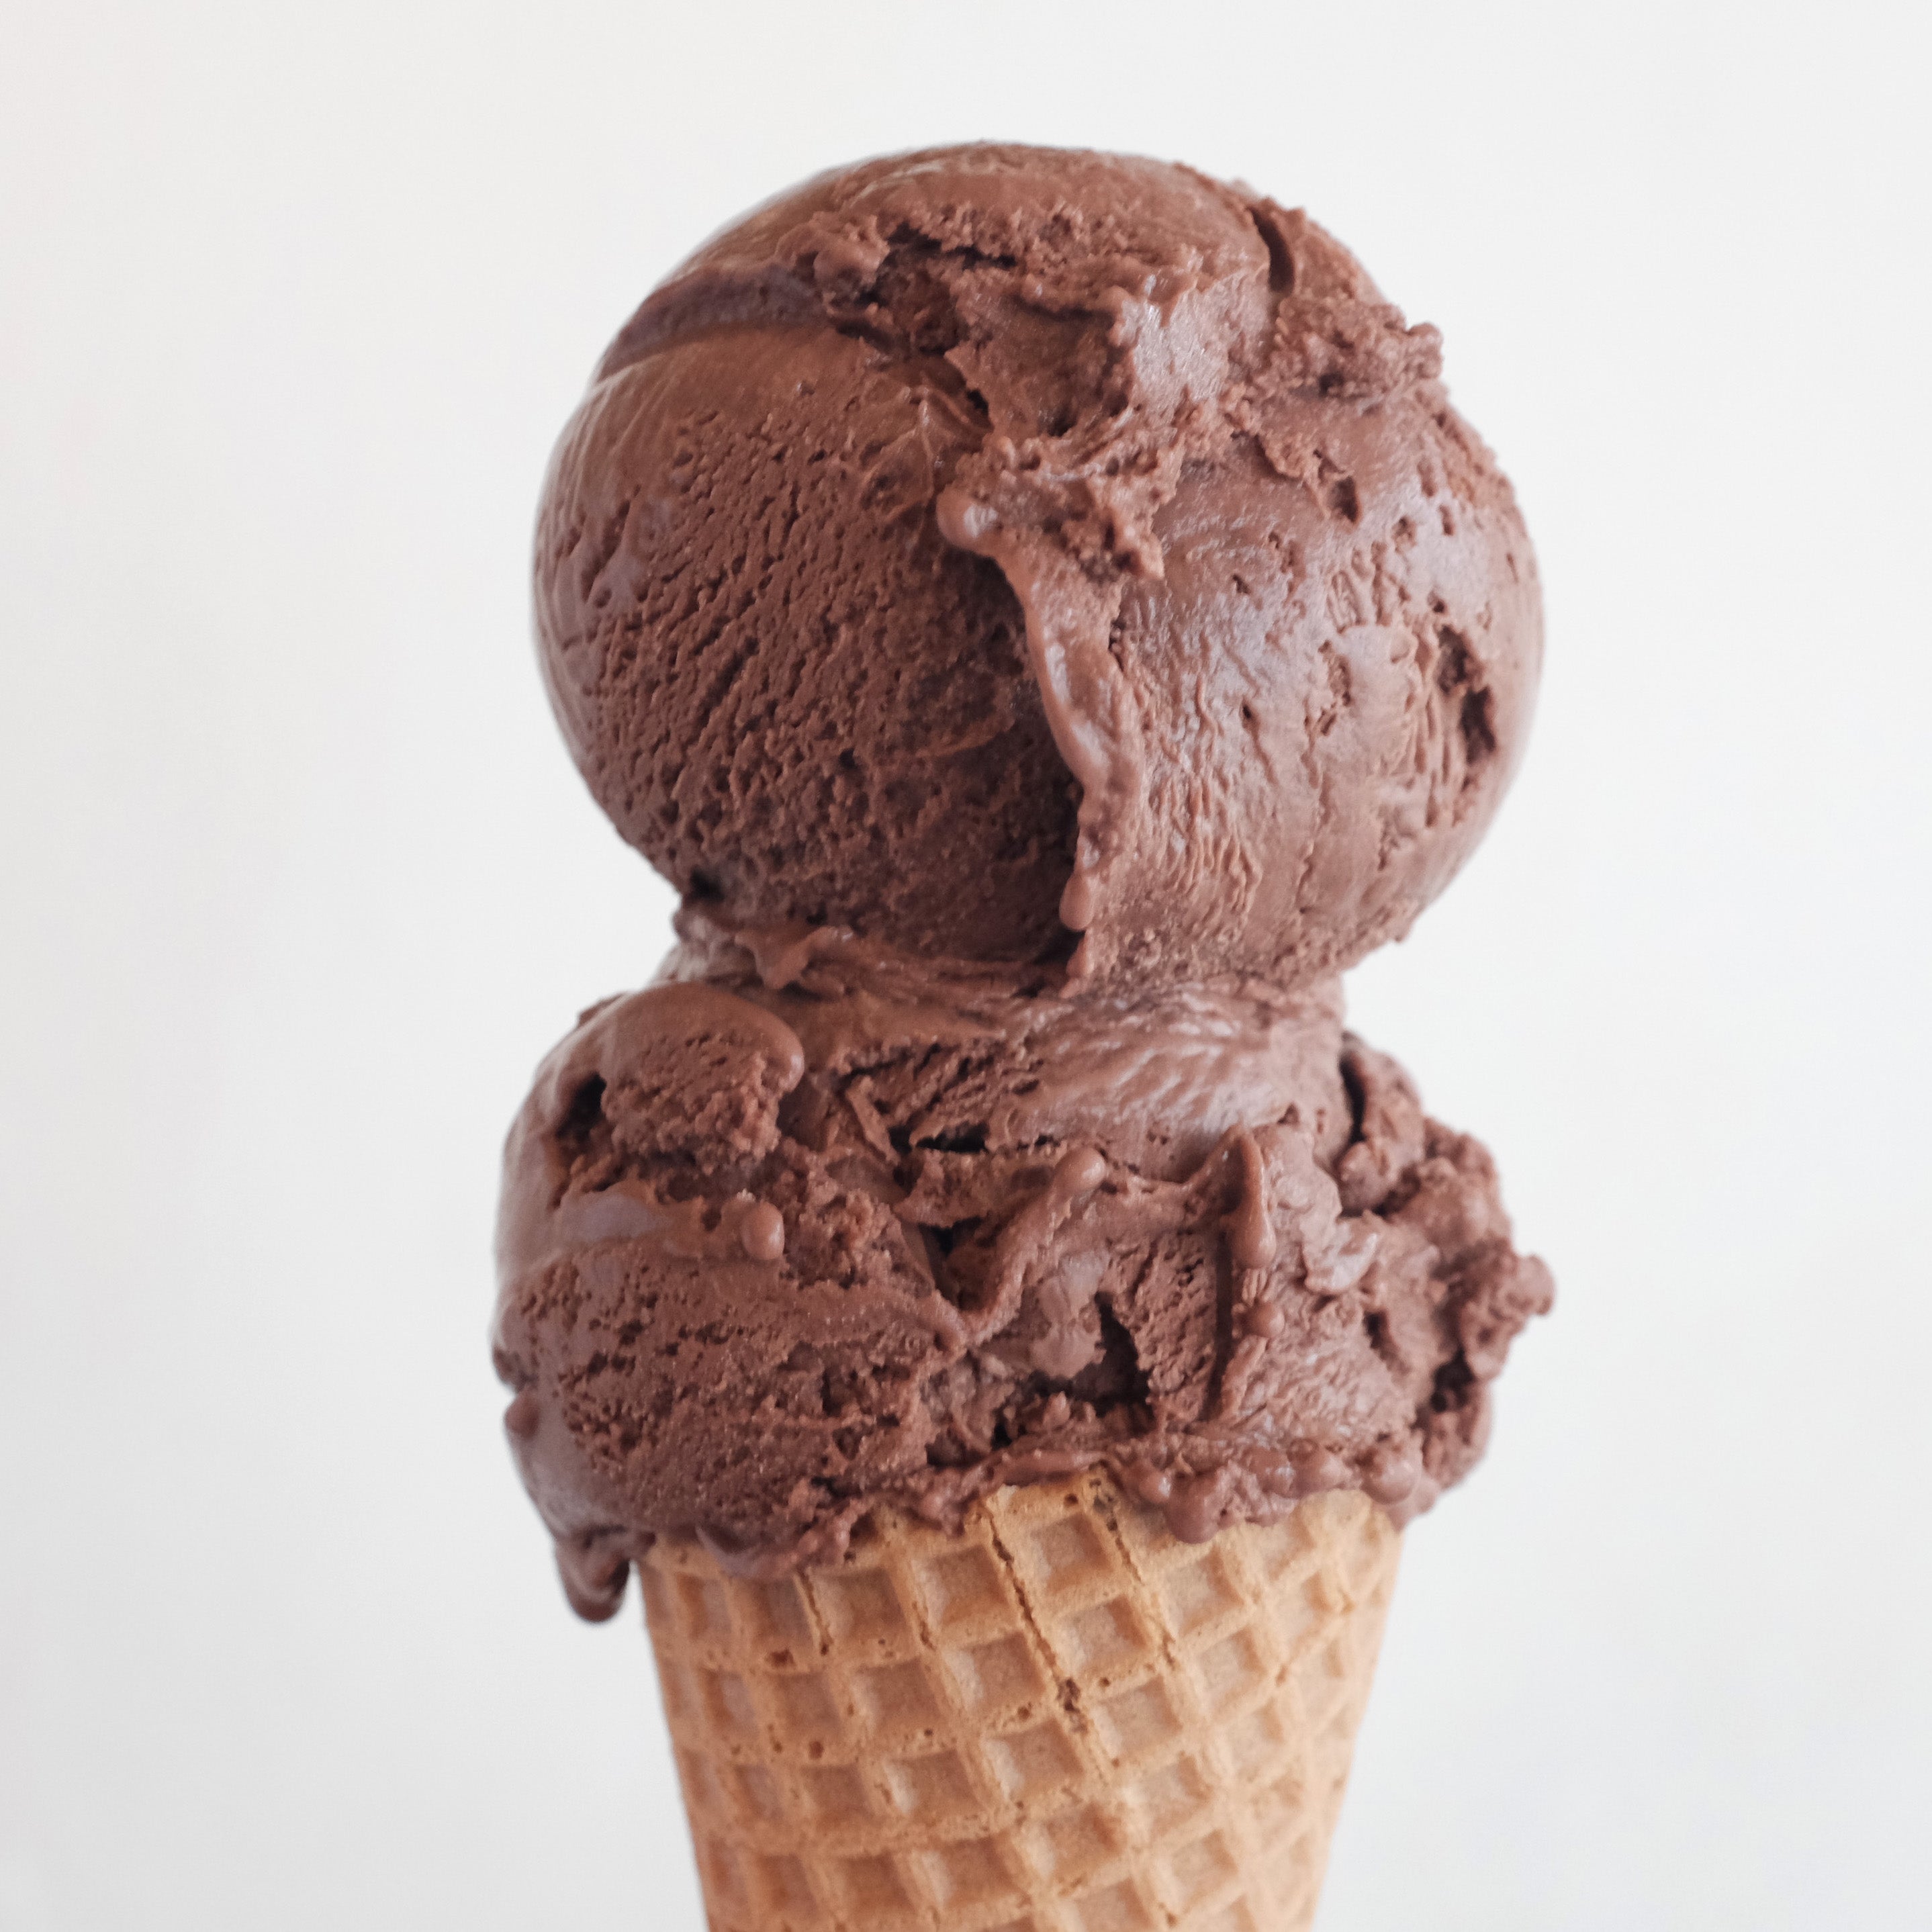 Plain Ole Chocolate Ice Cream: 100% Pure Chocolate Bliss